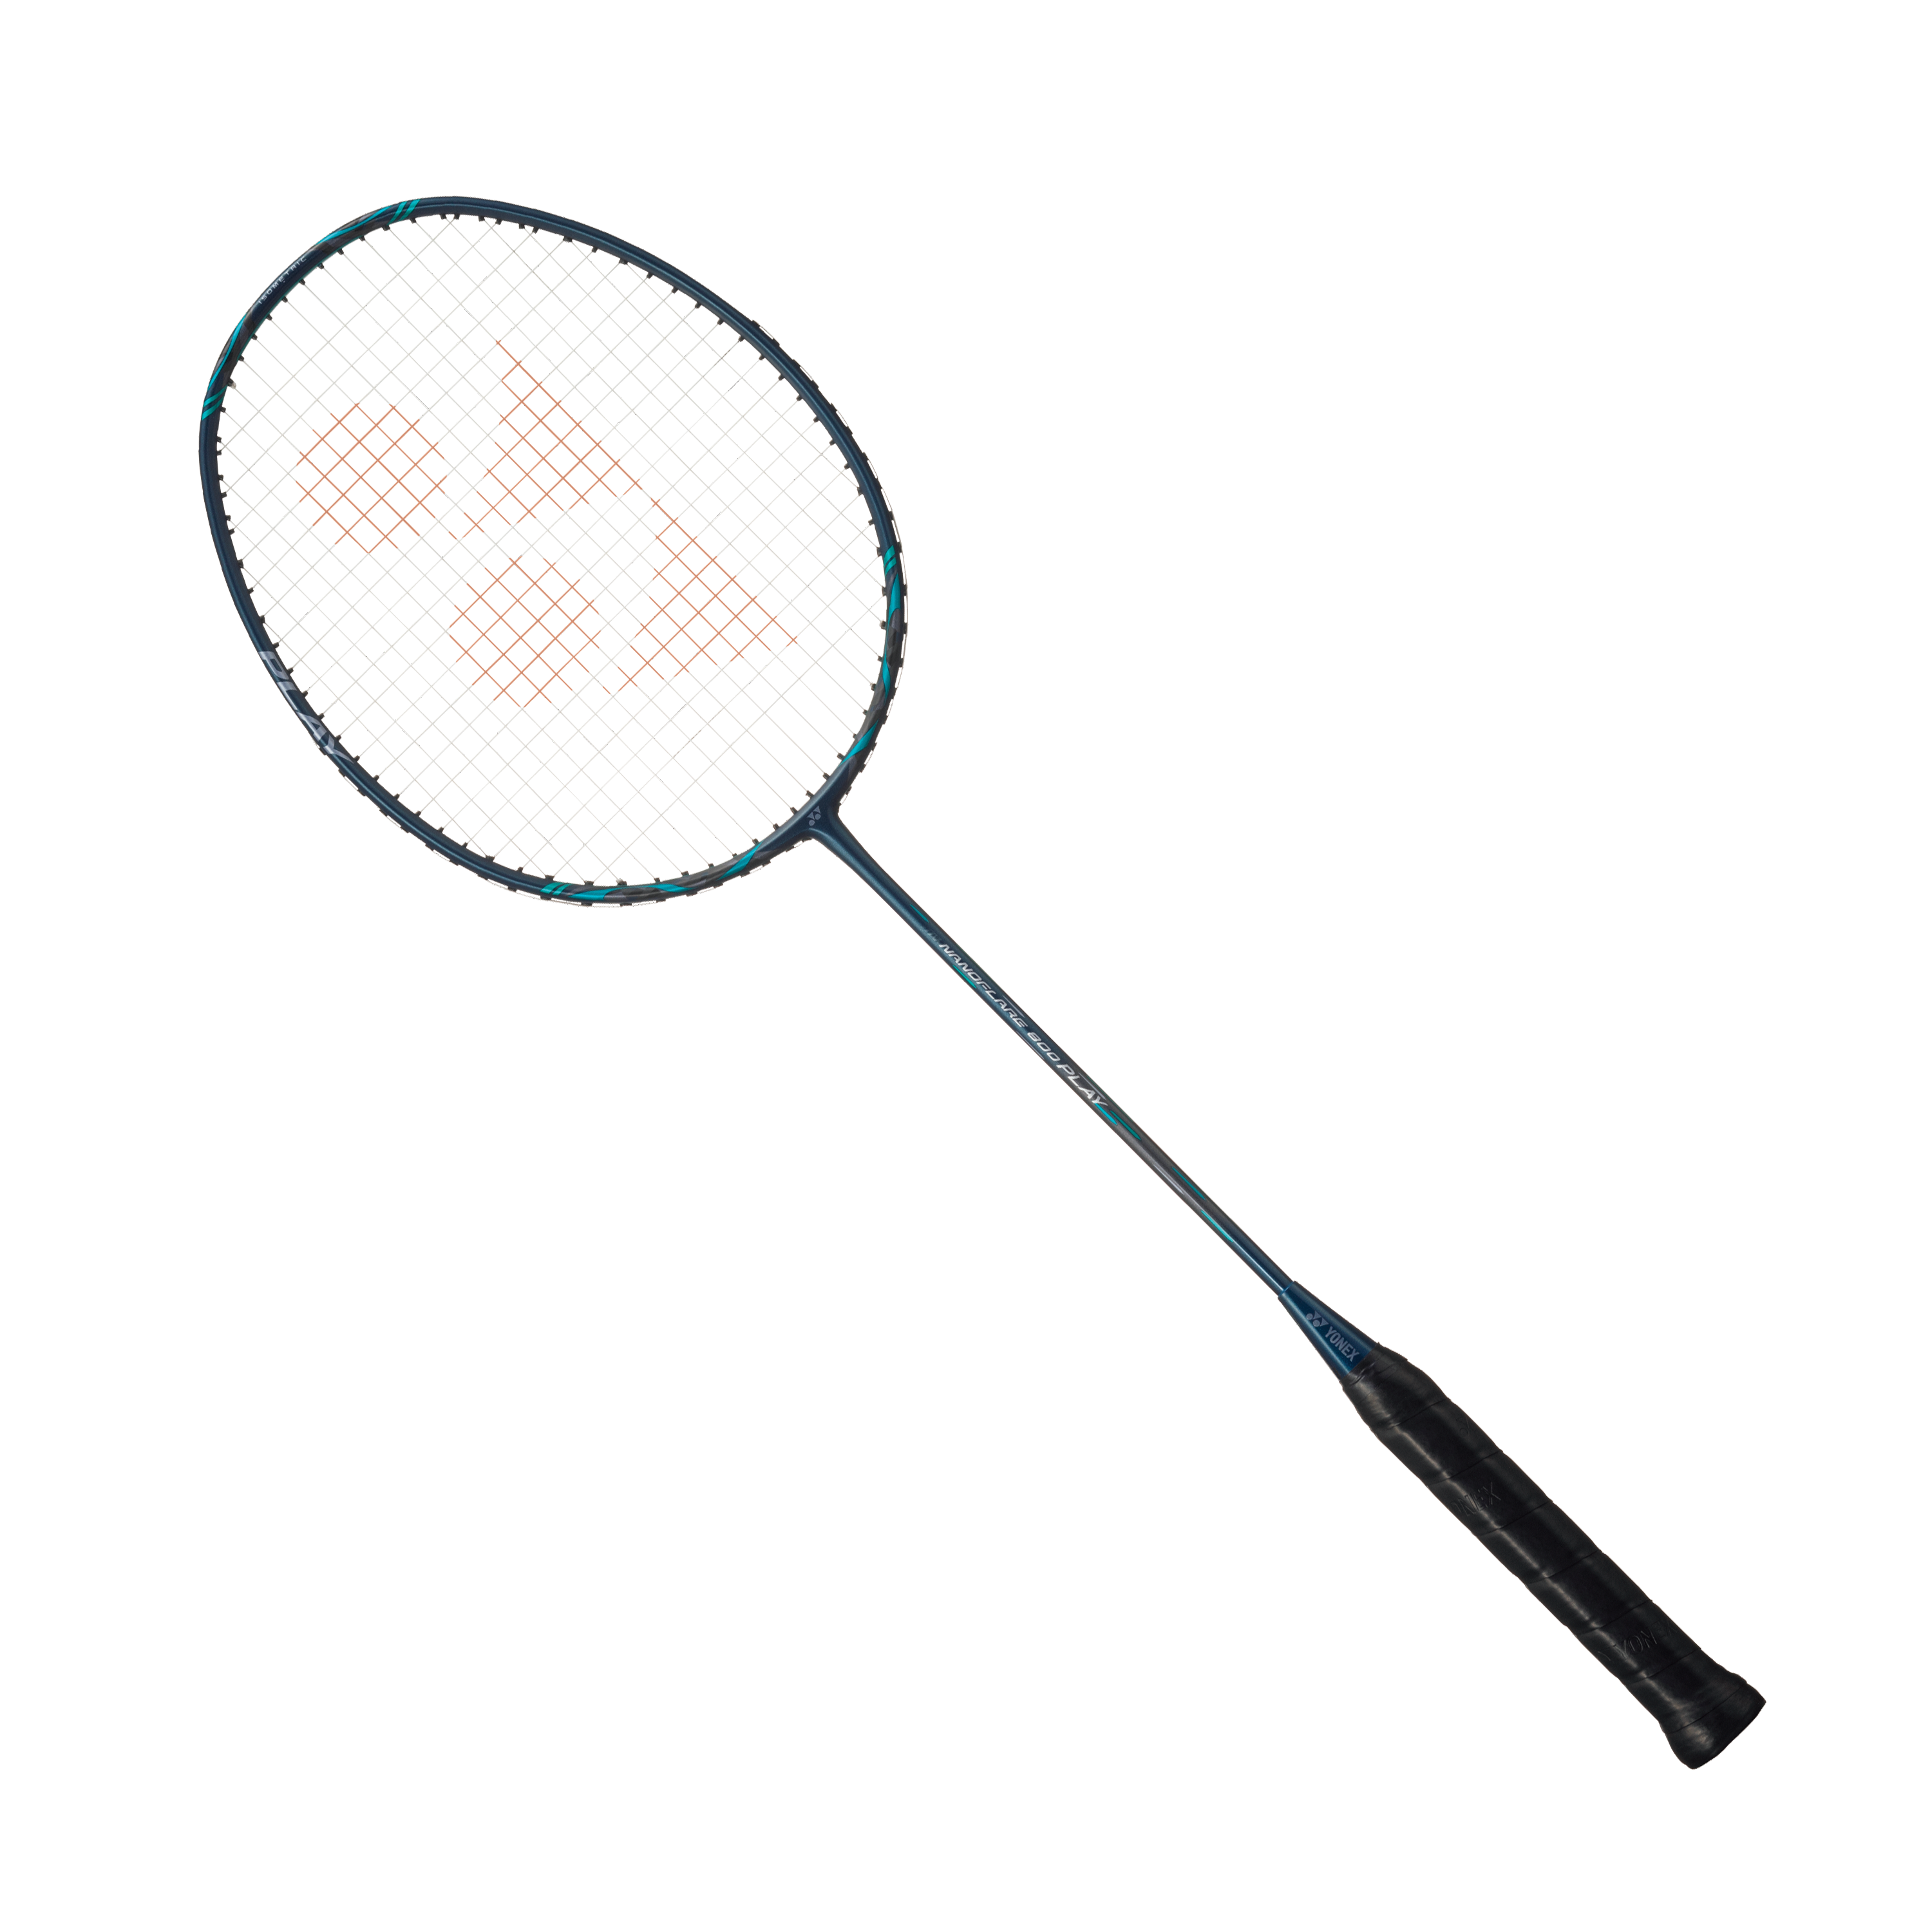 Yonex Nanoflare 800 Play Badminton Racquet Deep Green 4U(83g)G6